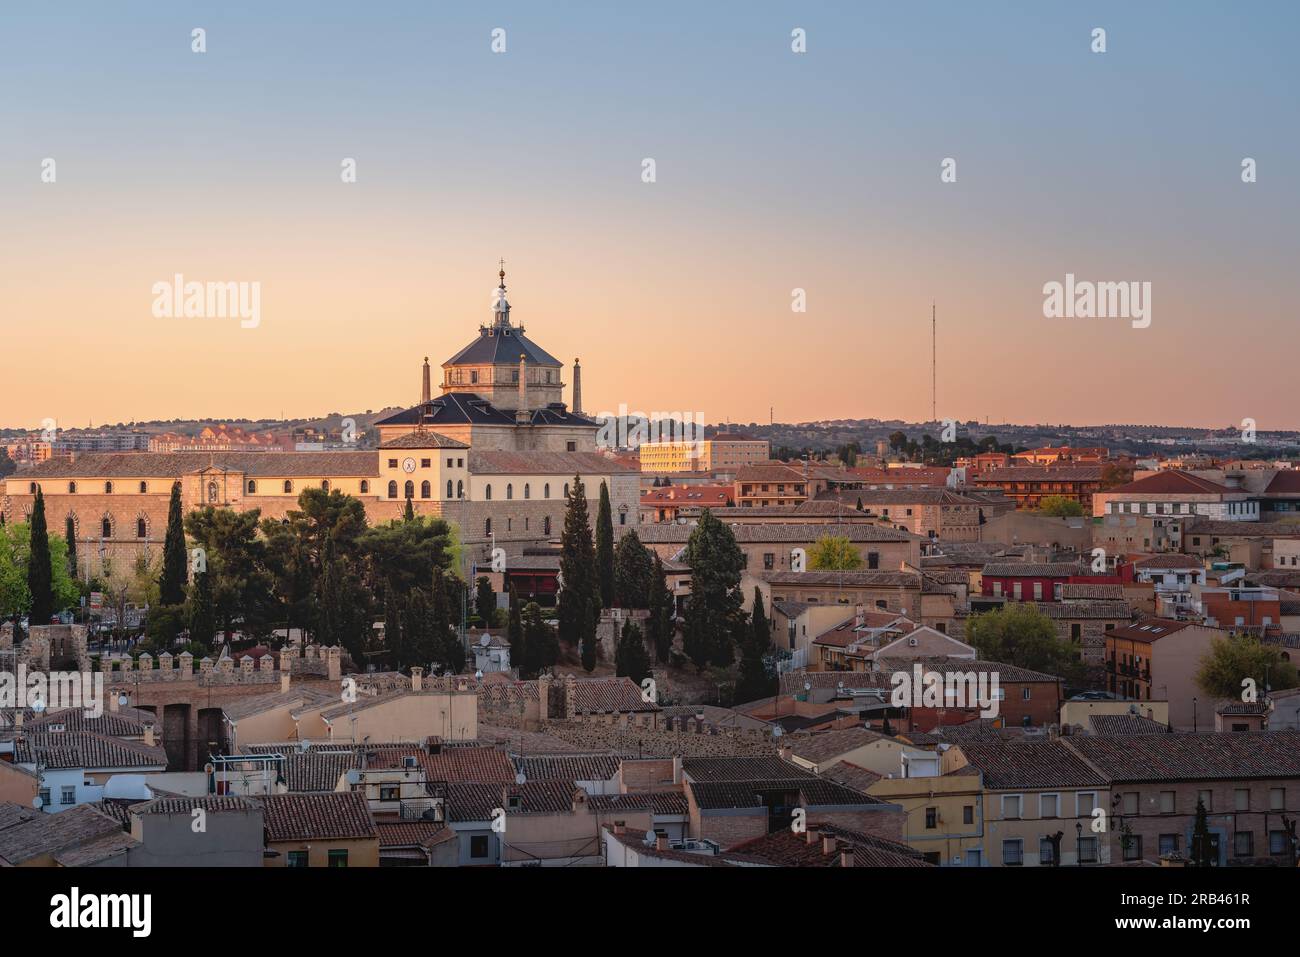 Skyline von Toledo bei Sonnenuntergang mit Hospital Tavera - Toledo, Spanien Stockfoto